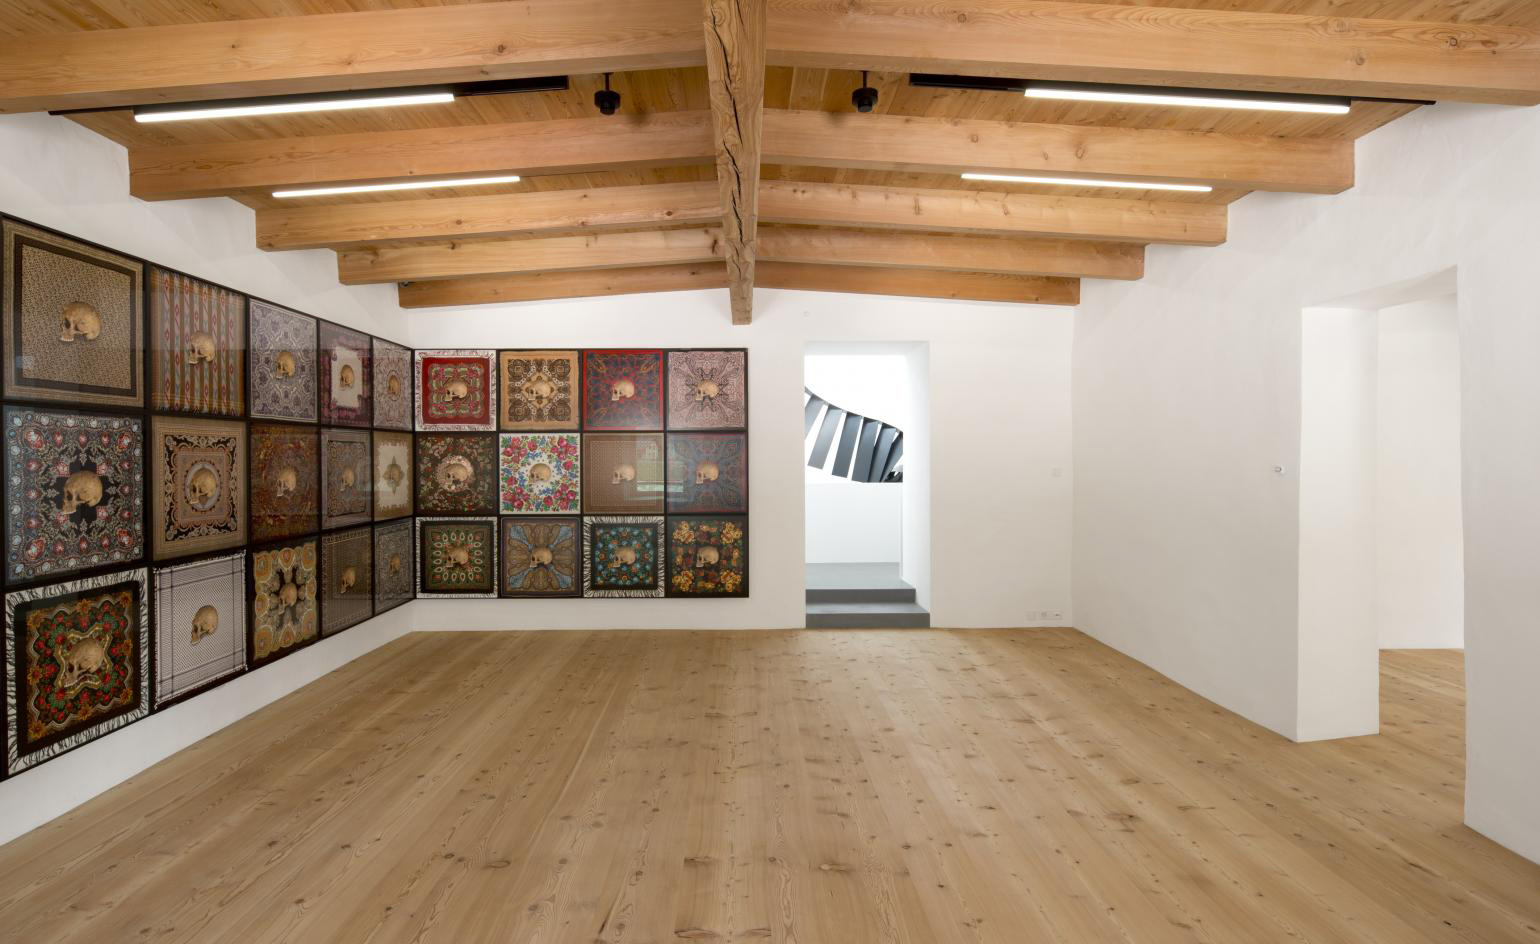 Historic Swiss monastery is reborn as new arts hub Muzeum Susch